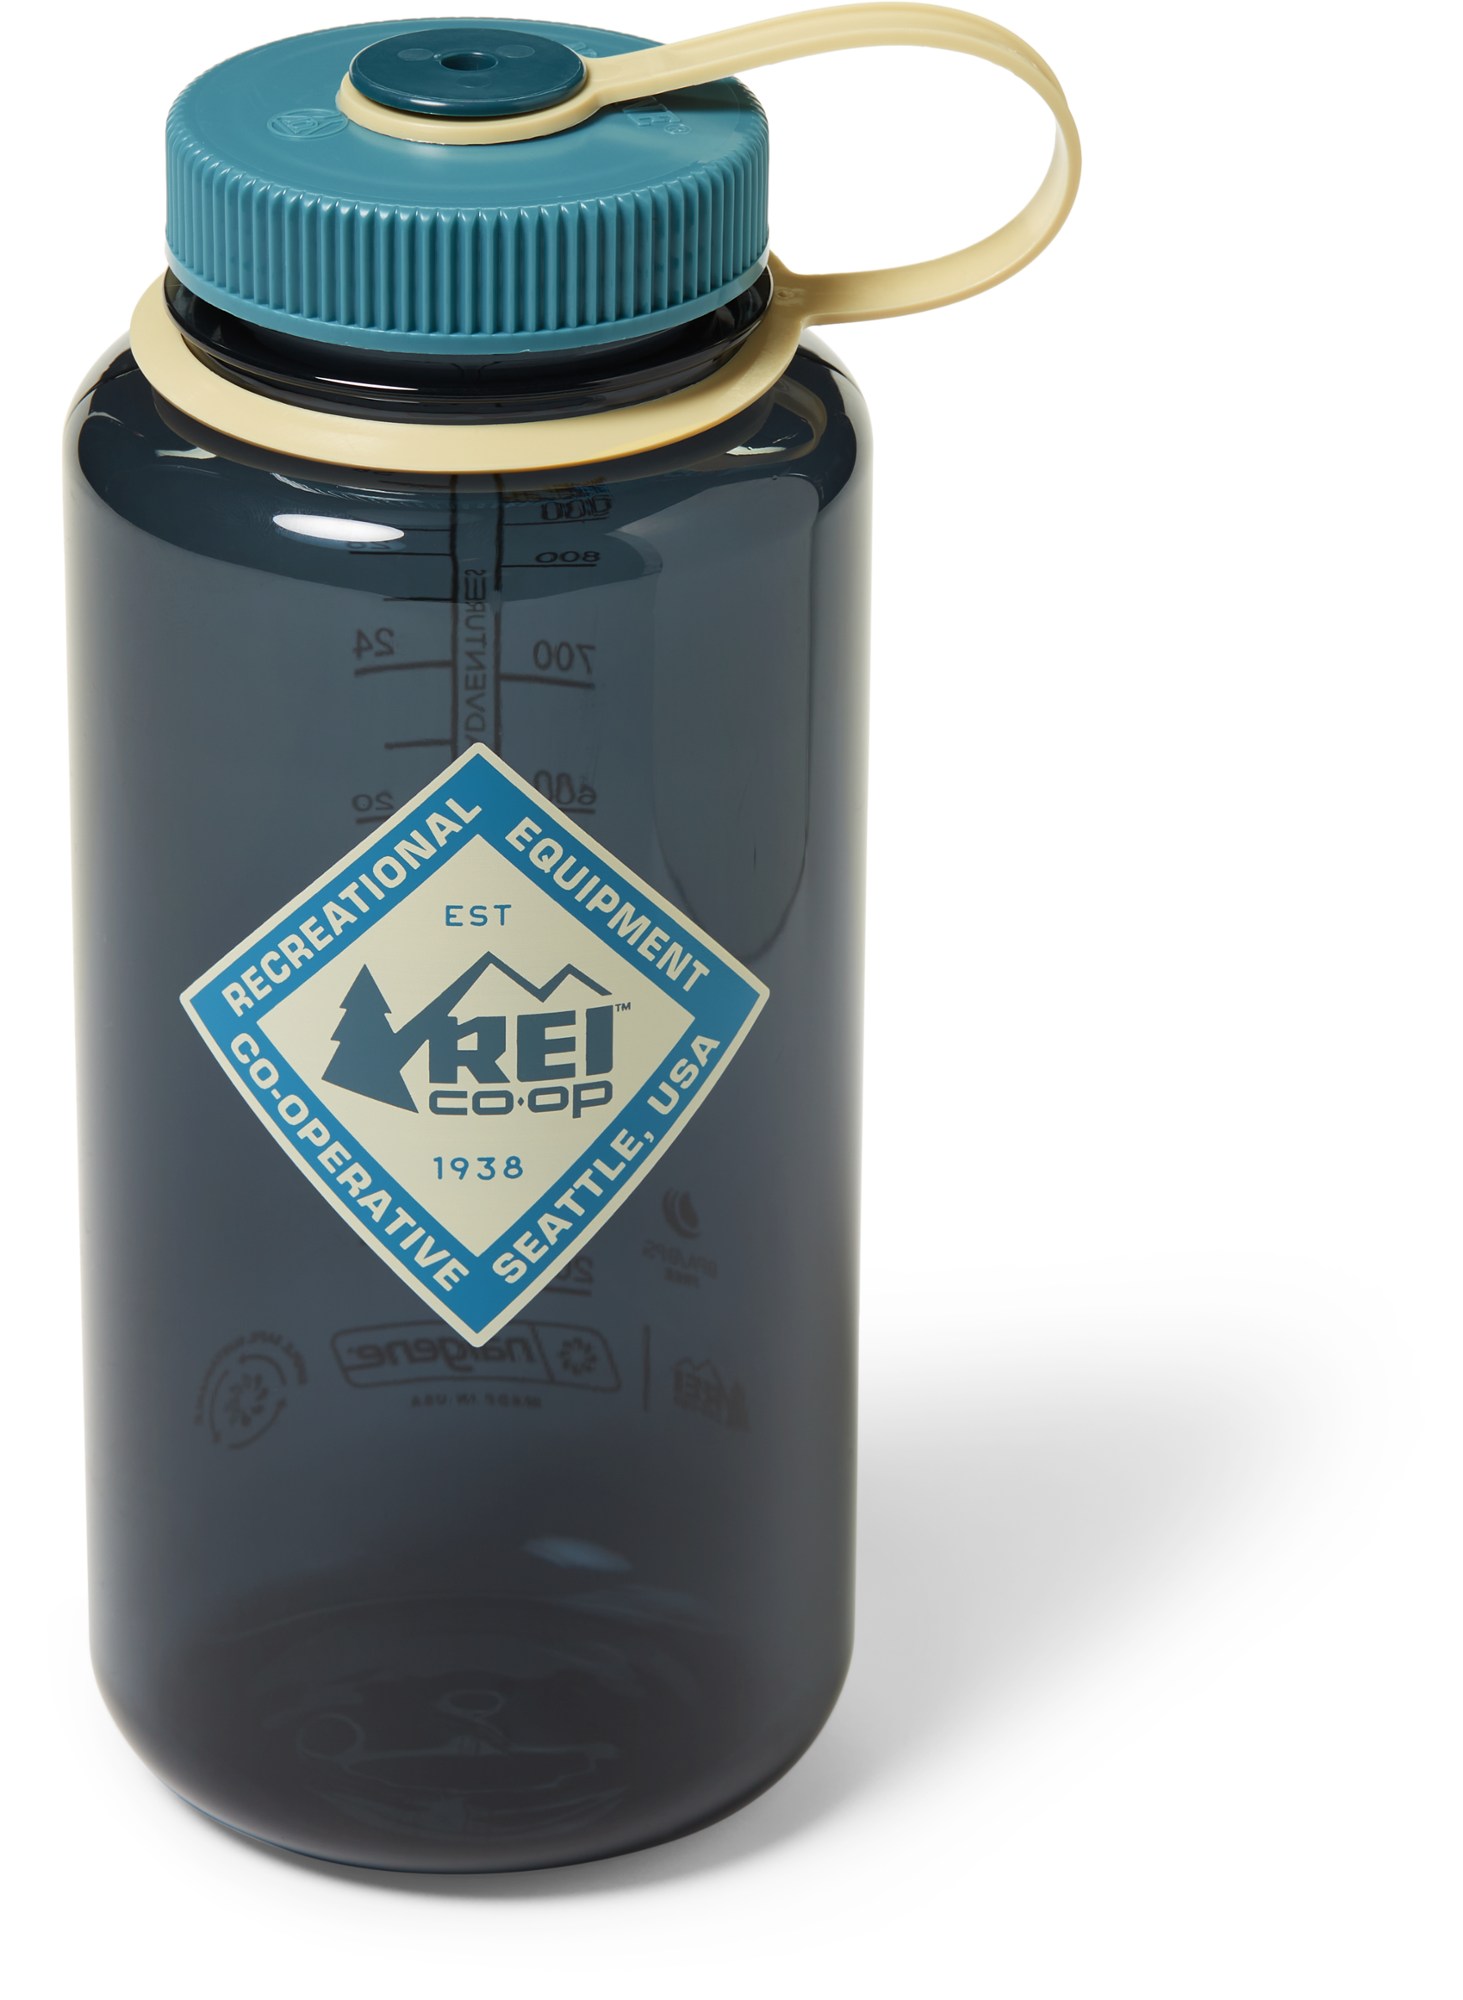 Бутылка для воды Nalgene Sustain Graphic с широким горлышком - 32 эт. унция REI Co-op, синий